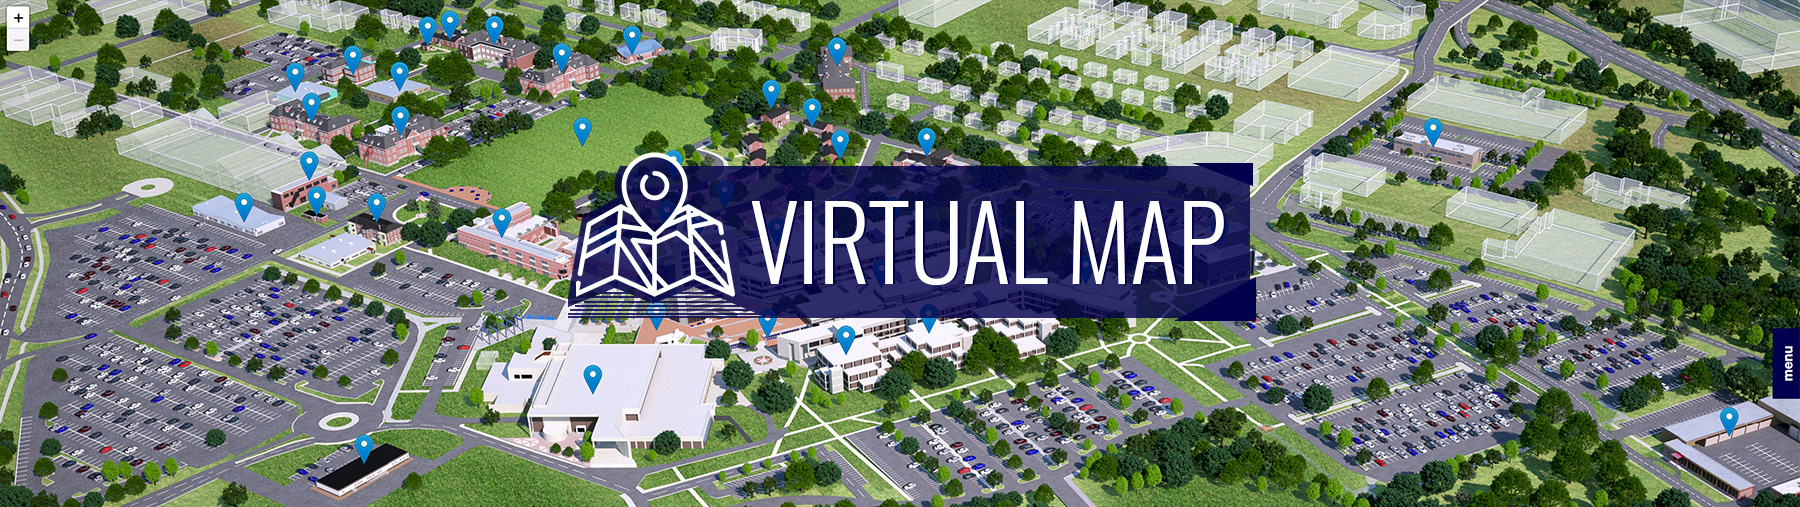 Virtual Map